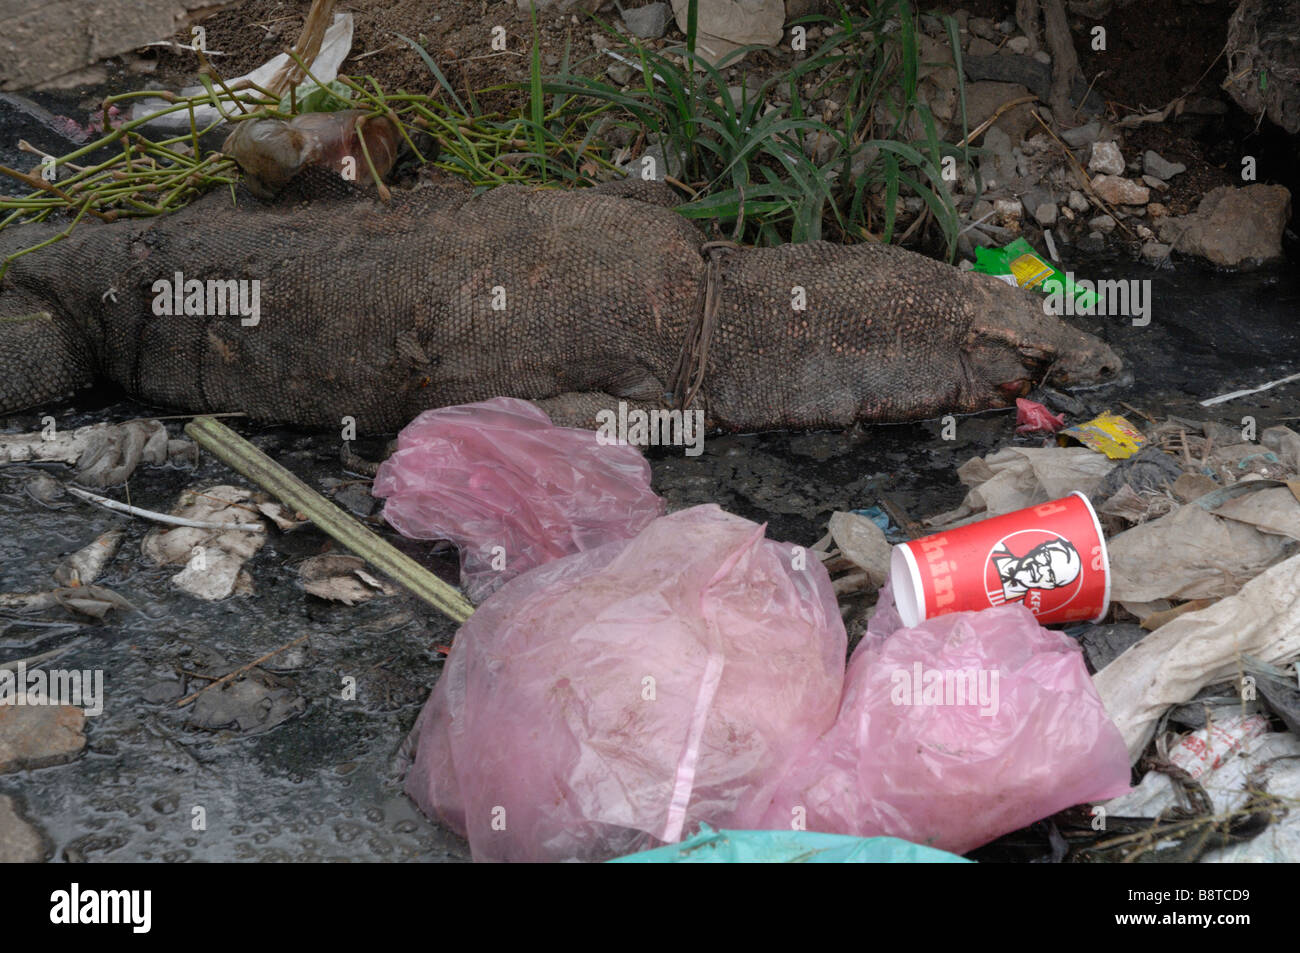 Toten malaiische Wasser Monitor Lizard Varanus Salvator in Abwasser Outfall liegen unter Wurf Semporna Sabah Malaysia Borneo Süden eas Stockfoto